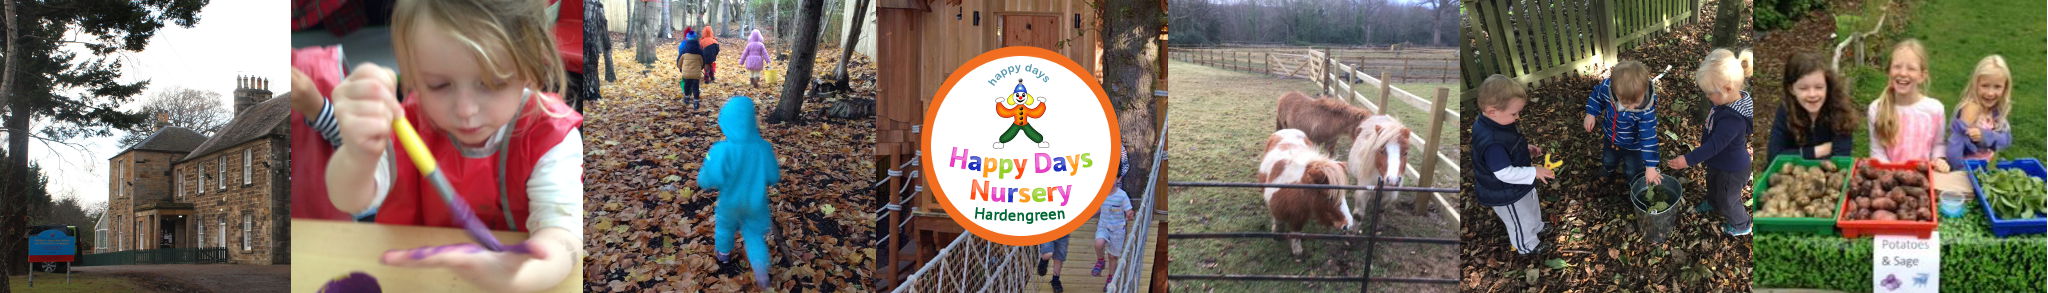 Happy Days Nursery Hardengreen